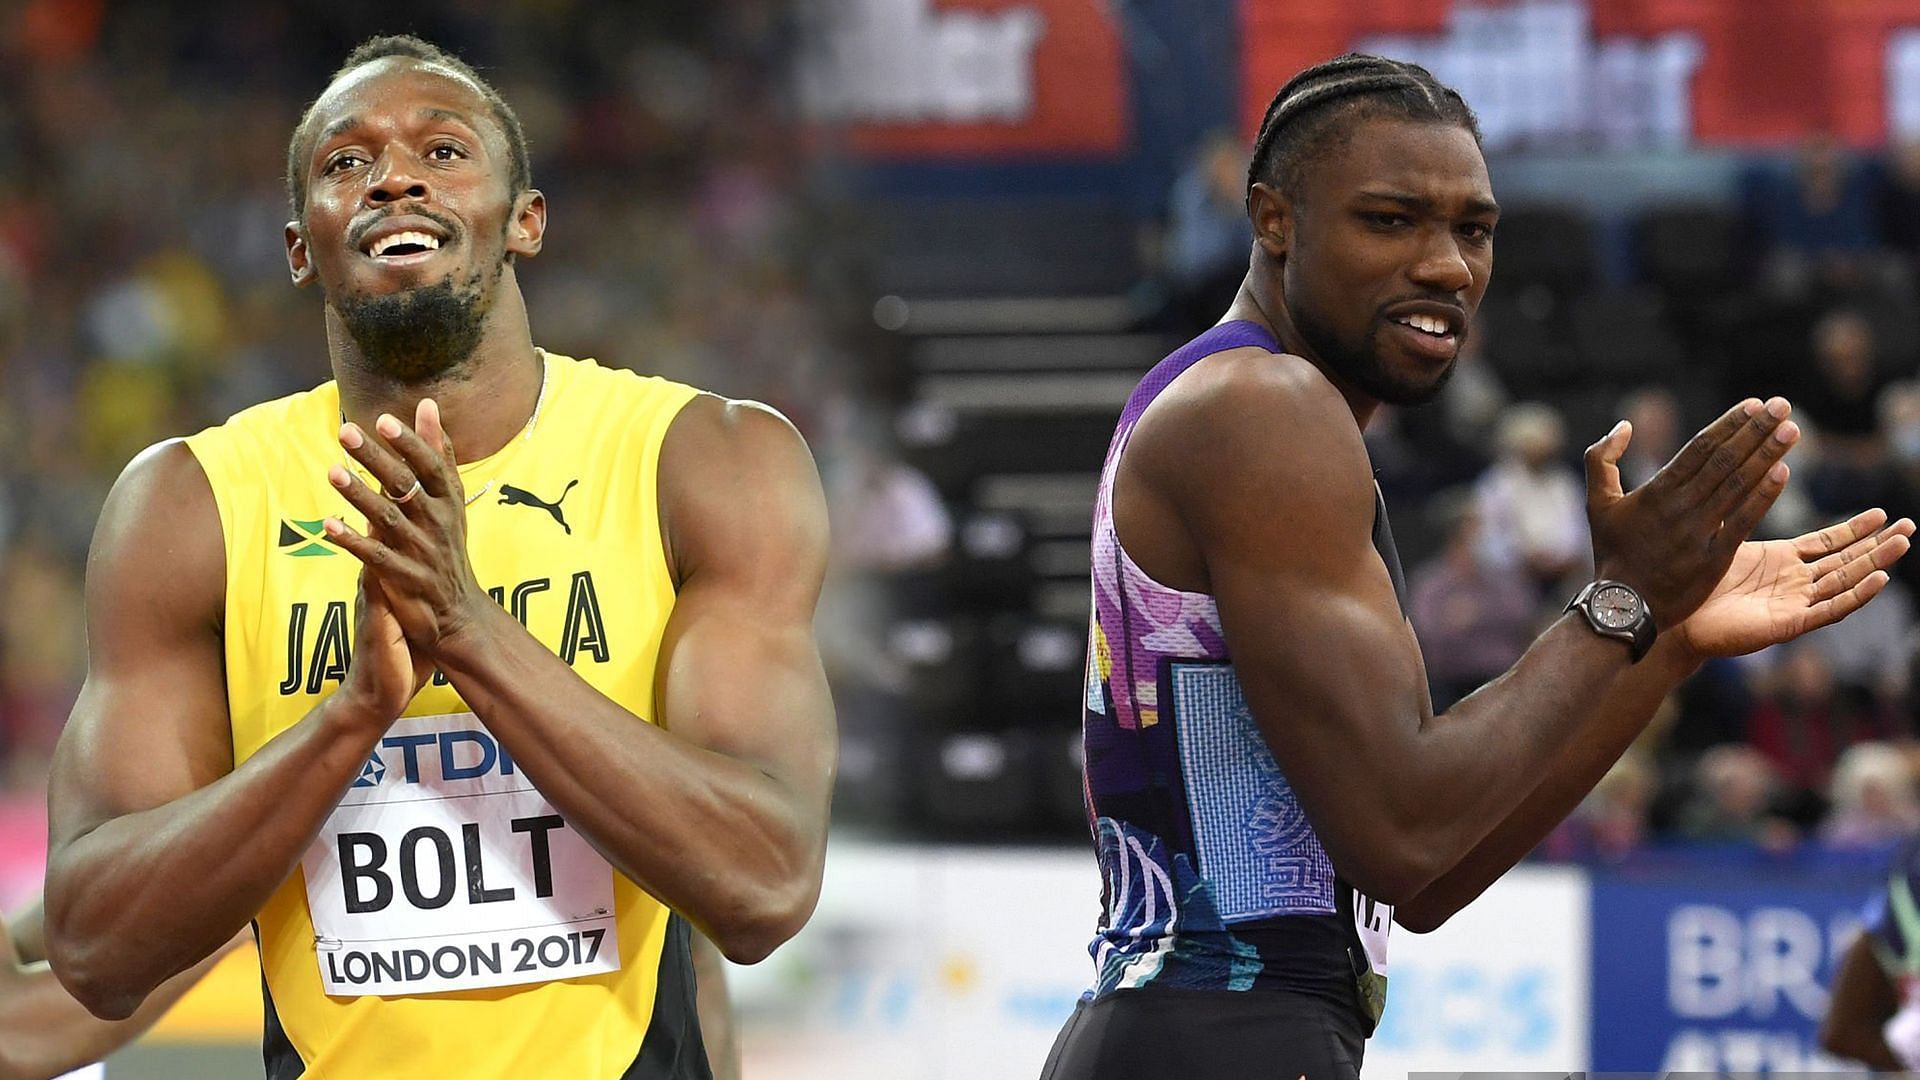 Noah Lyles and Usain Bolt (Image via Getty)